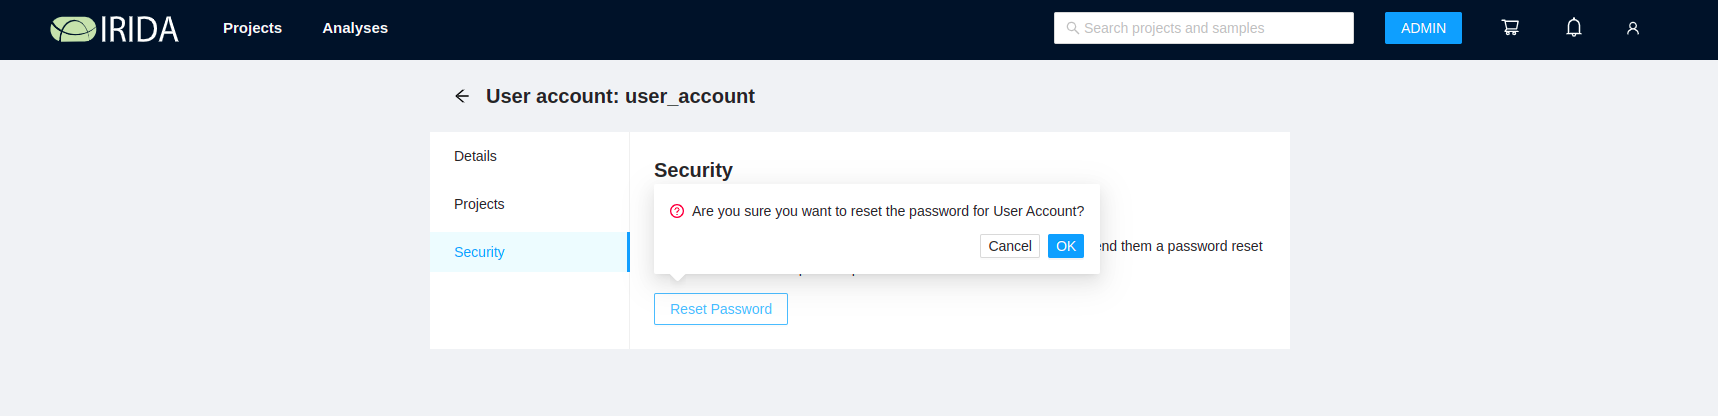 Reset password confirmation dialog.